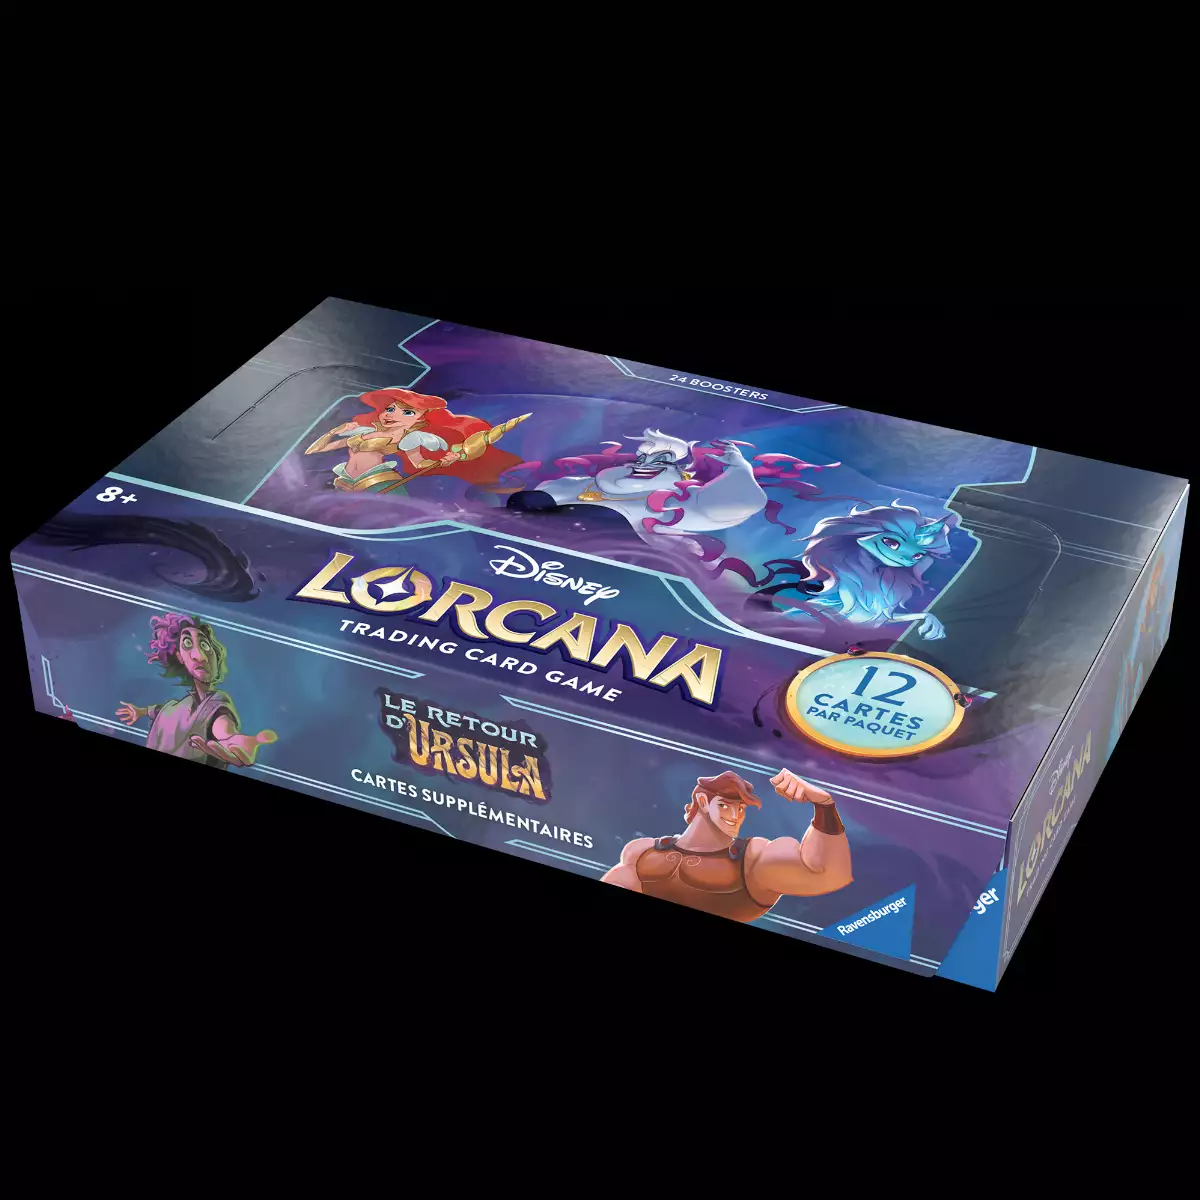 Display Disney Lorcana Set 4: Le retour d'ursula (24 boosters)